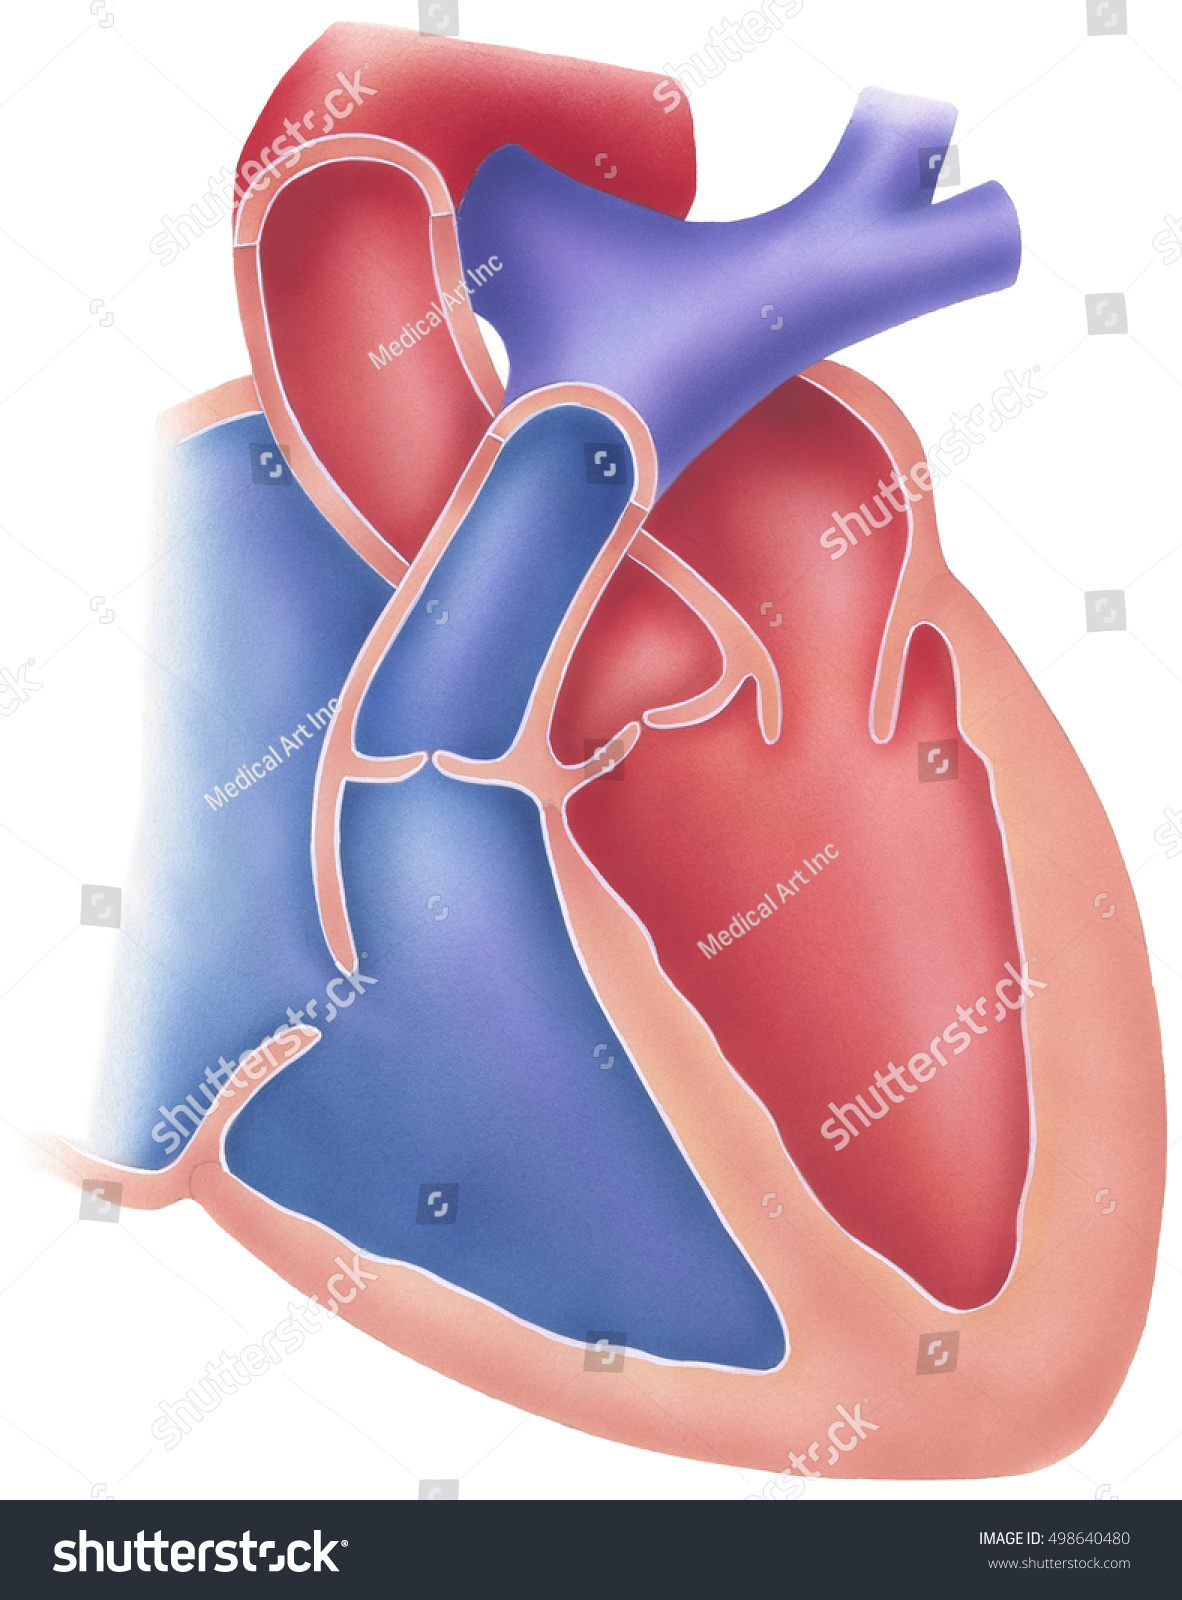 Human Heart Cutaway View Showing Internal Structure Stock Photo ...